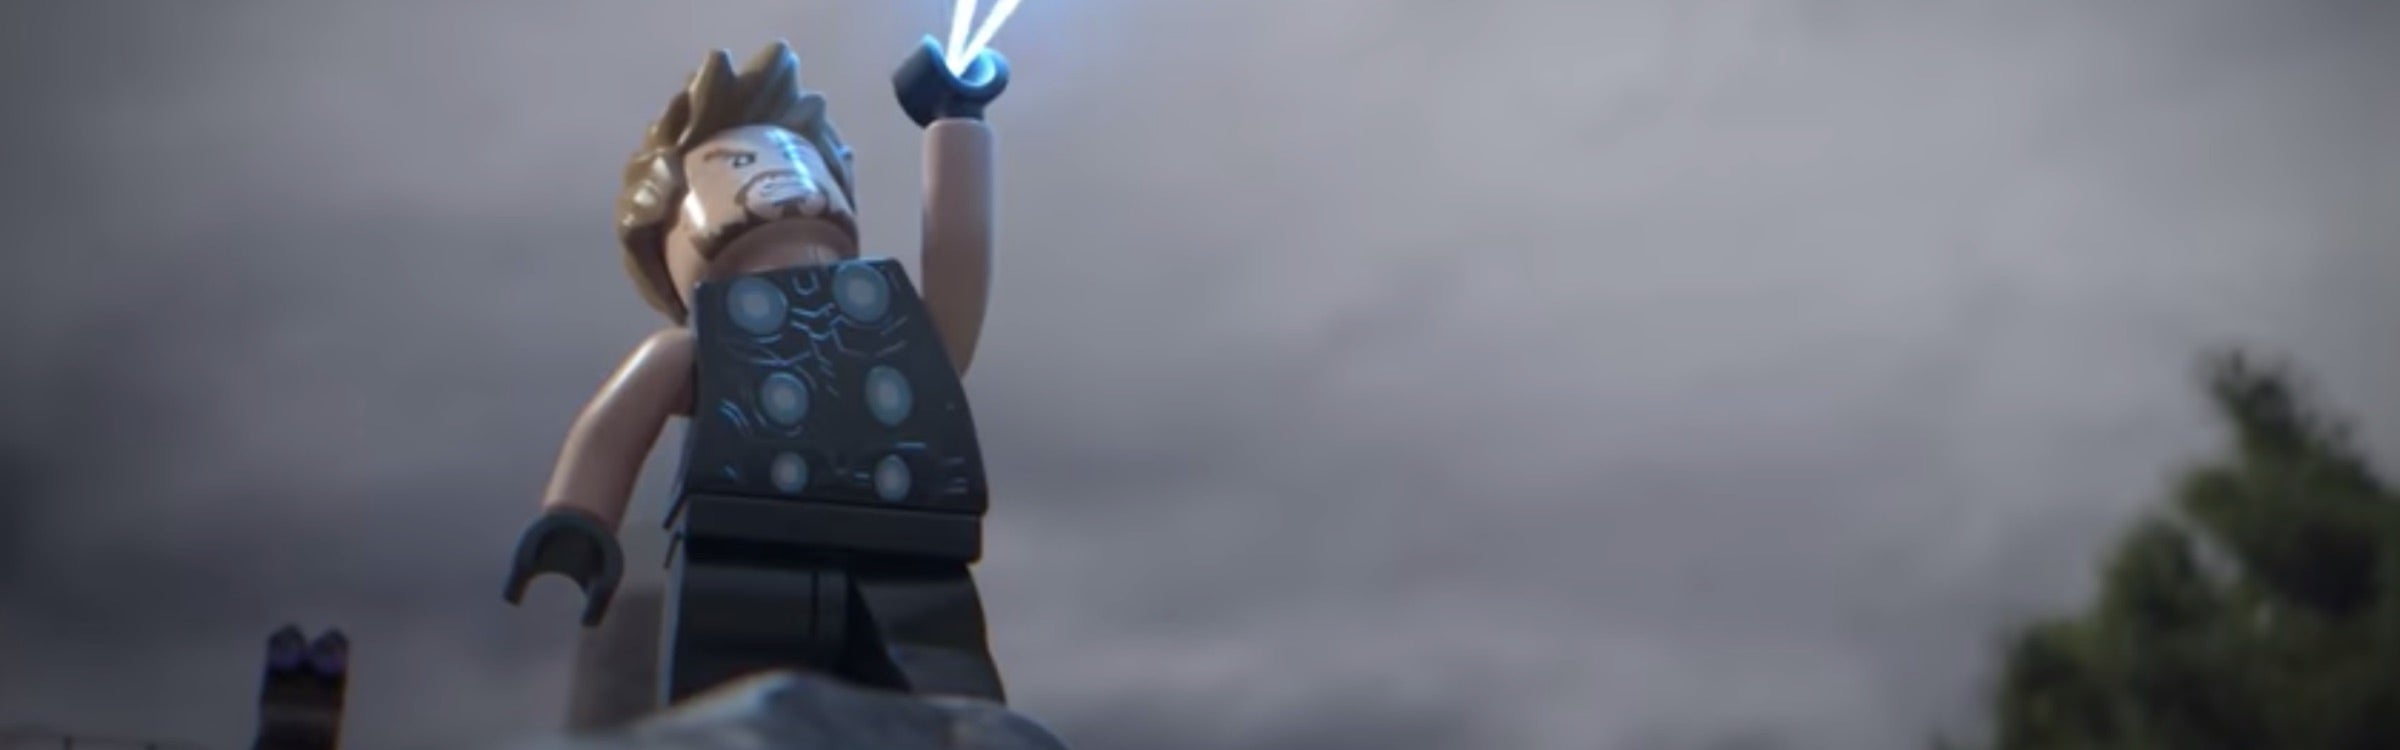 Lego MiniFigure Marvel Superheroes Thor with Hammer NEW Set 30165 Birthday 